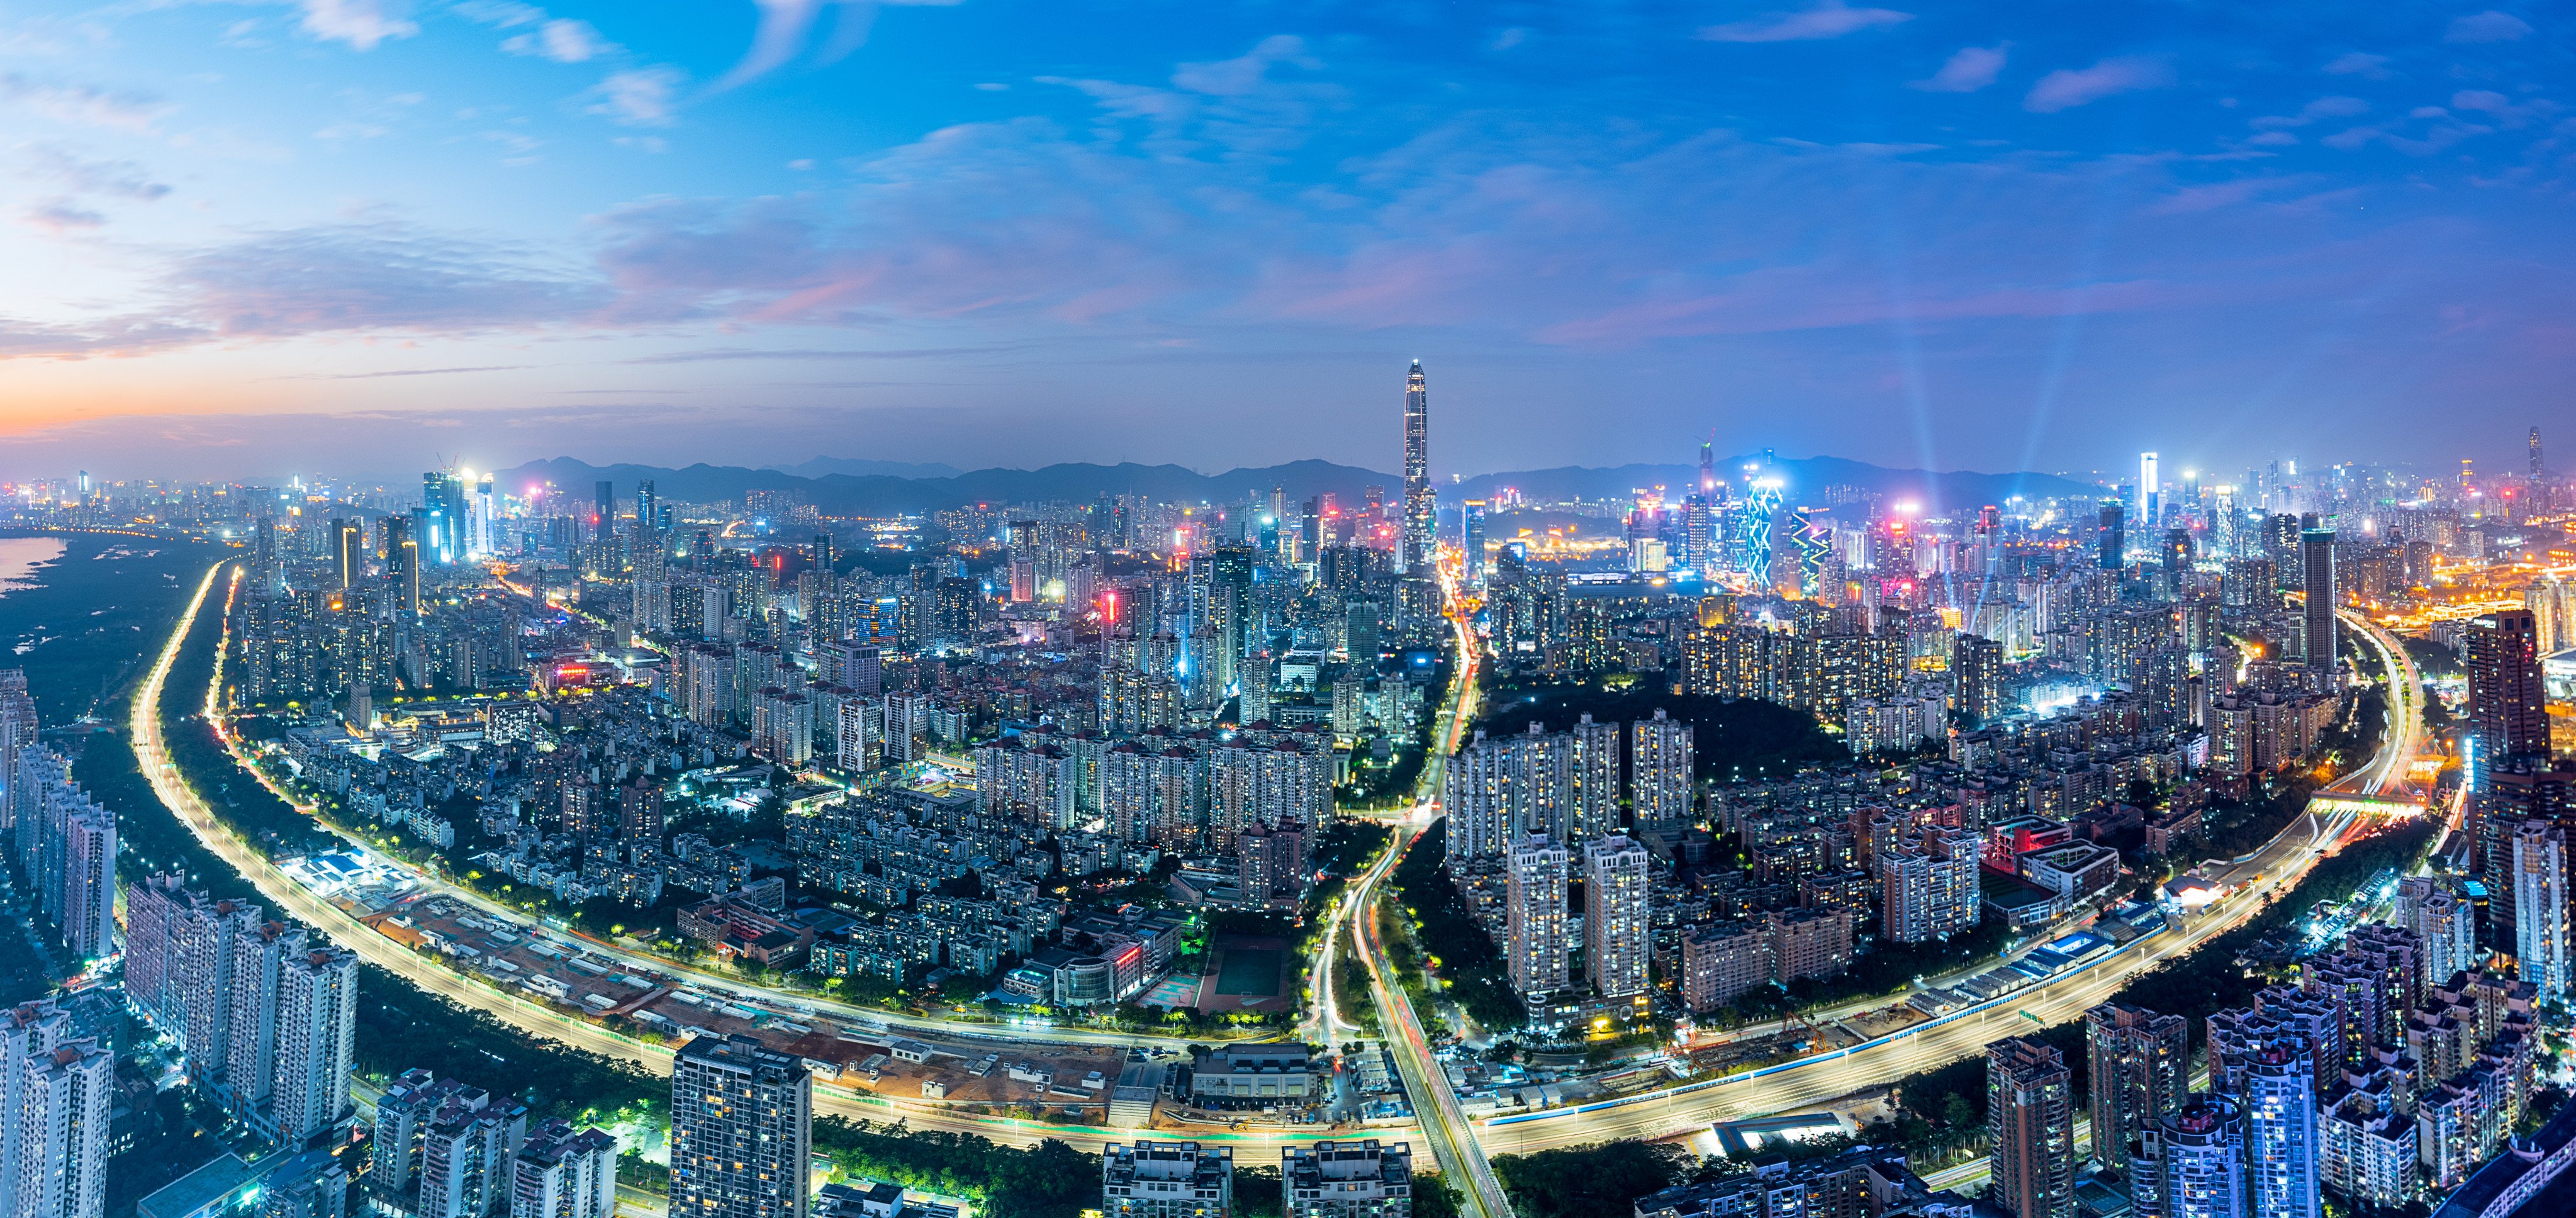 An aerial view of the Nanshan area of Shenzhen, Guangdong province, China.
Photo: Shutterstock